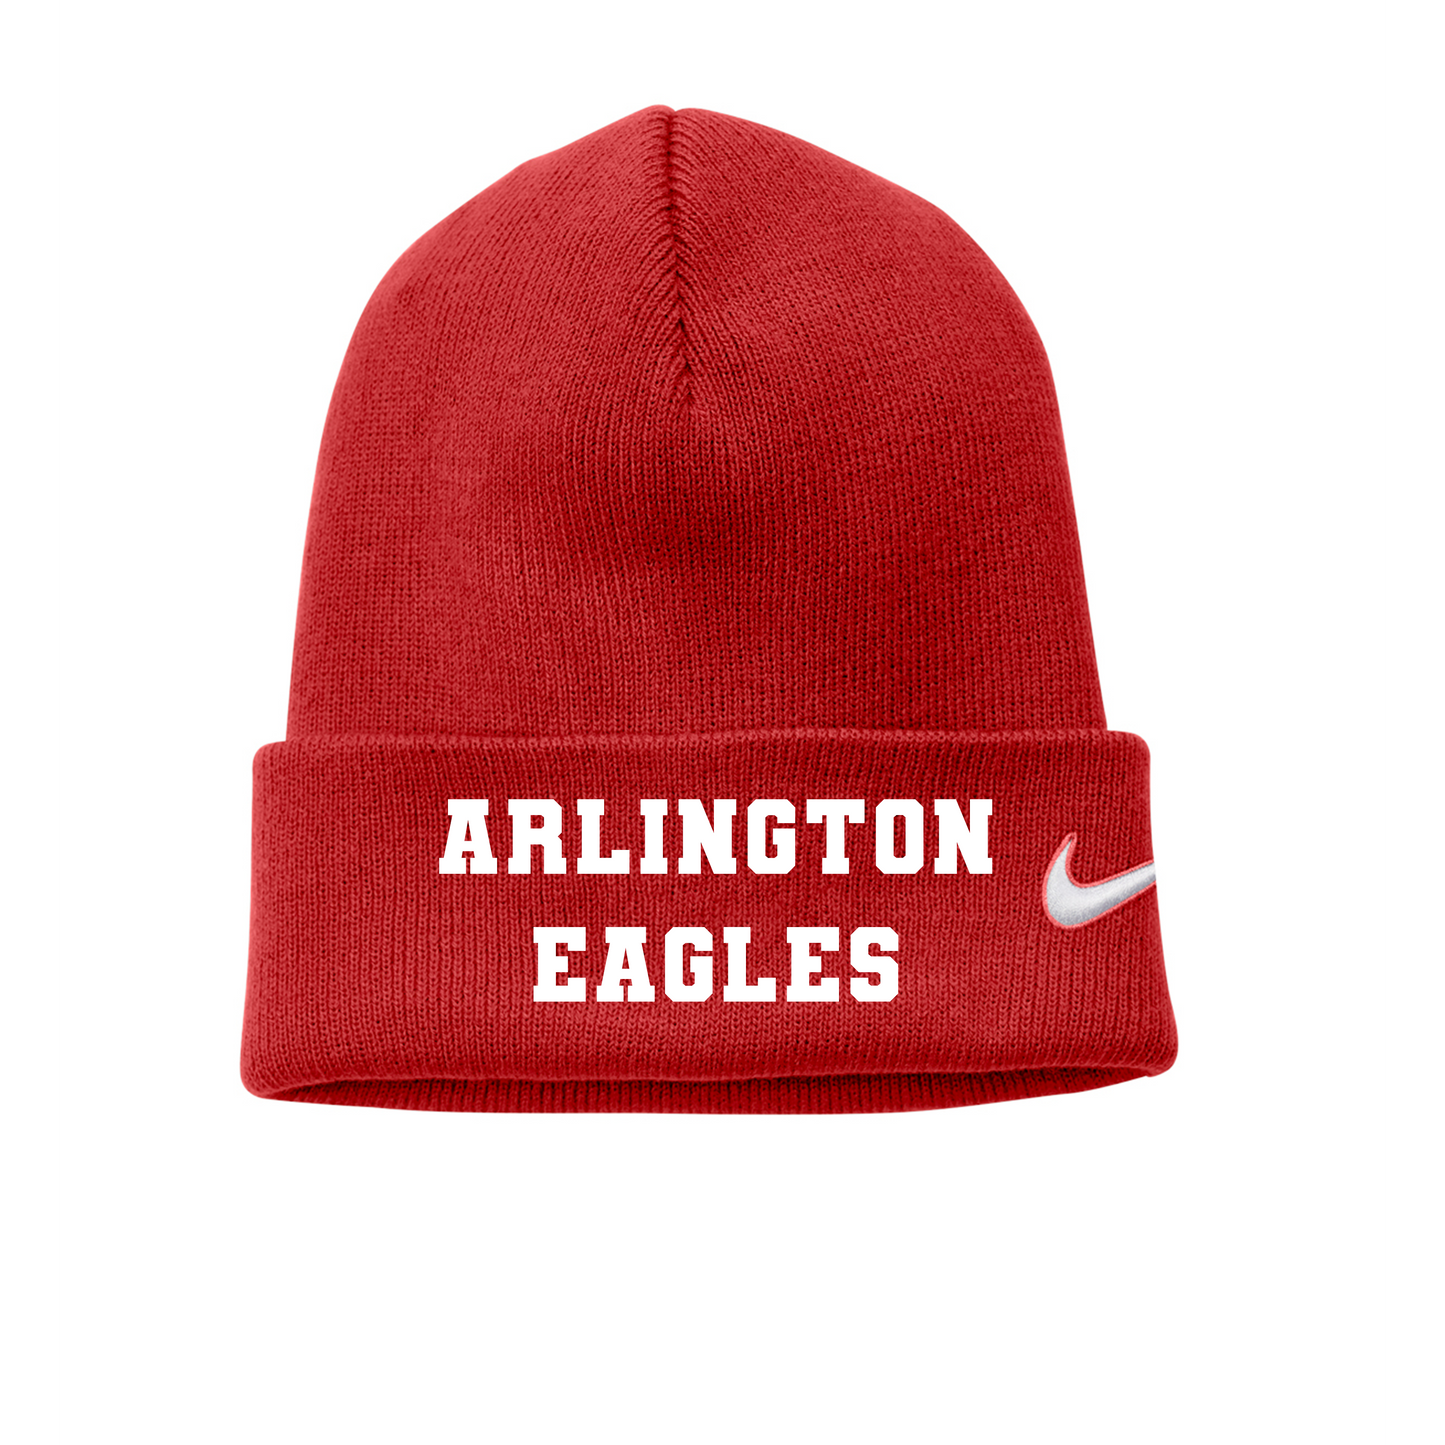 Arlington Eagles Nike Beanie